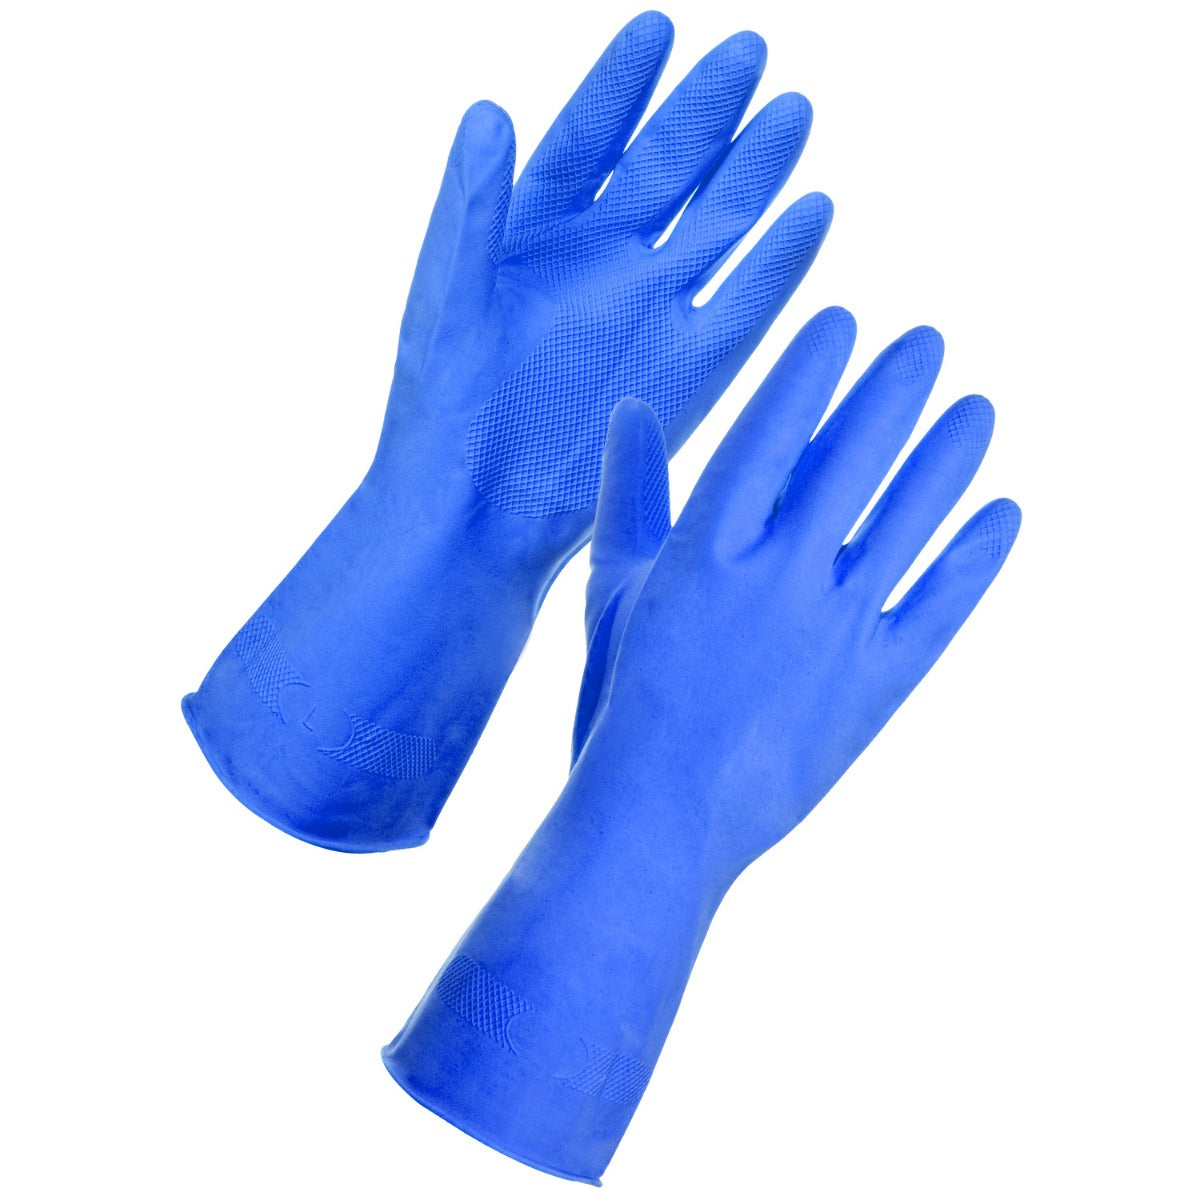 Purely Class Household Rubber Gloves Blue Medium x 1 Pair